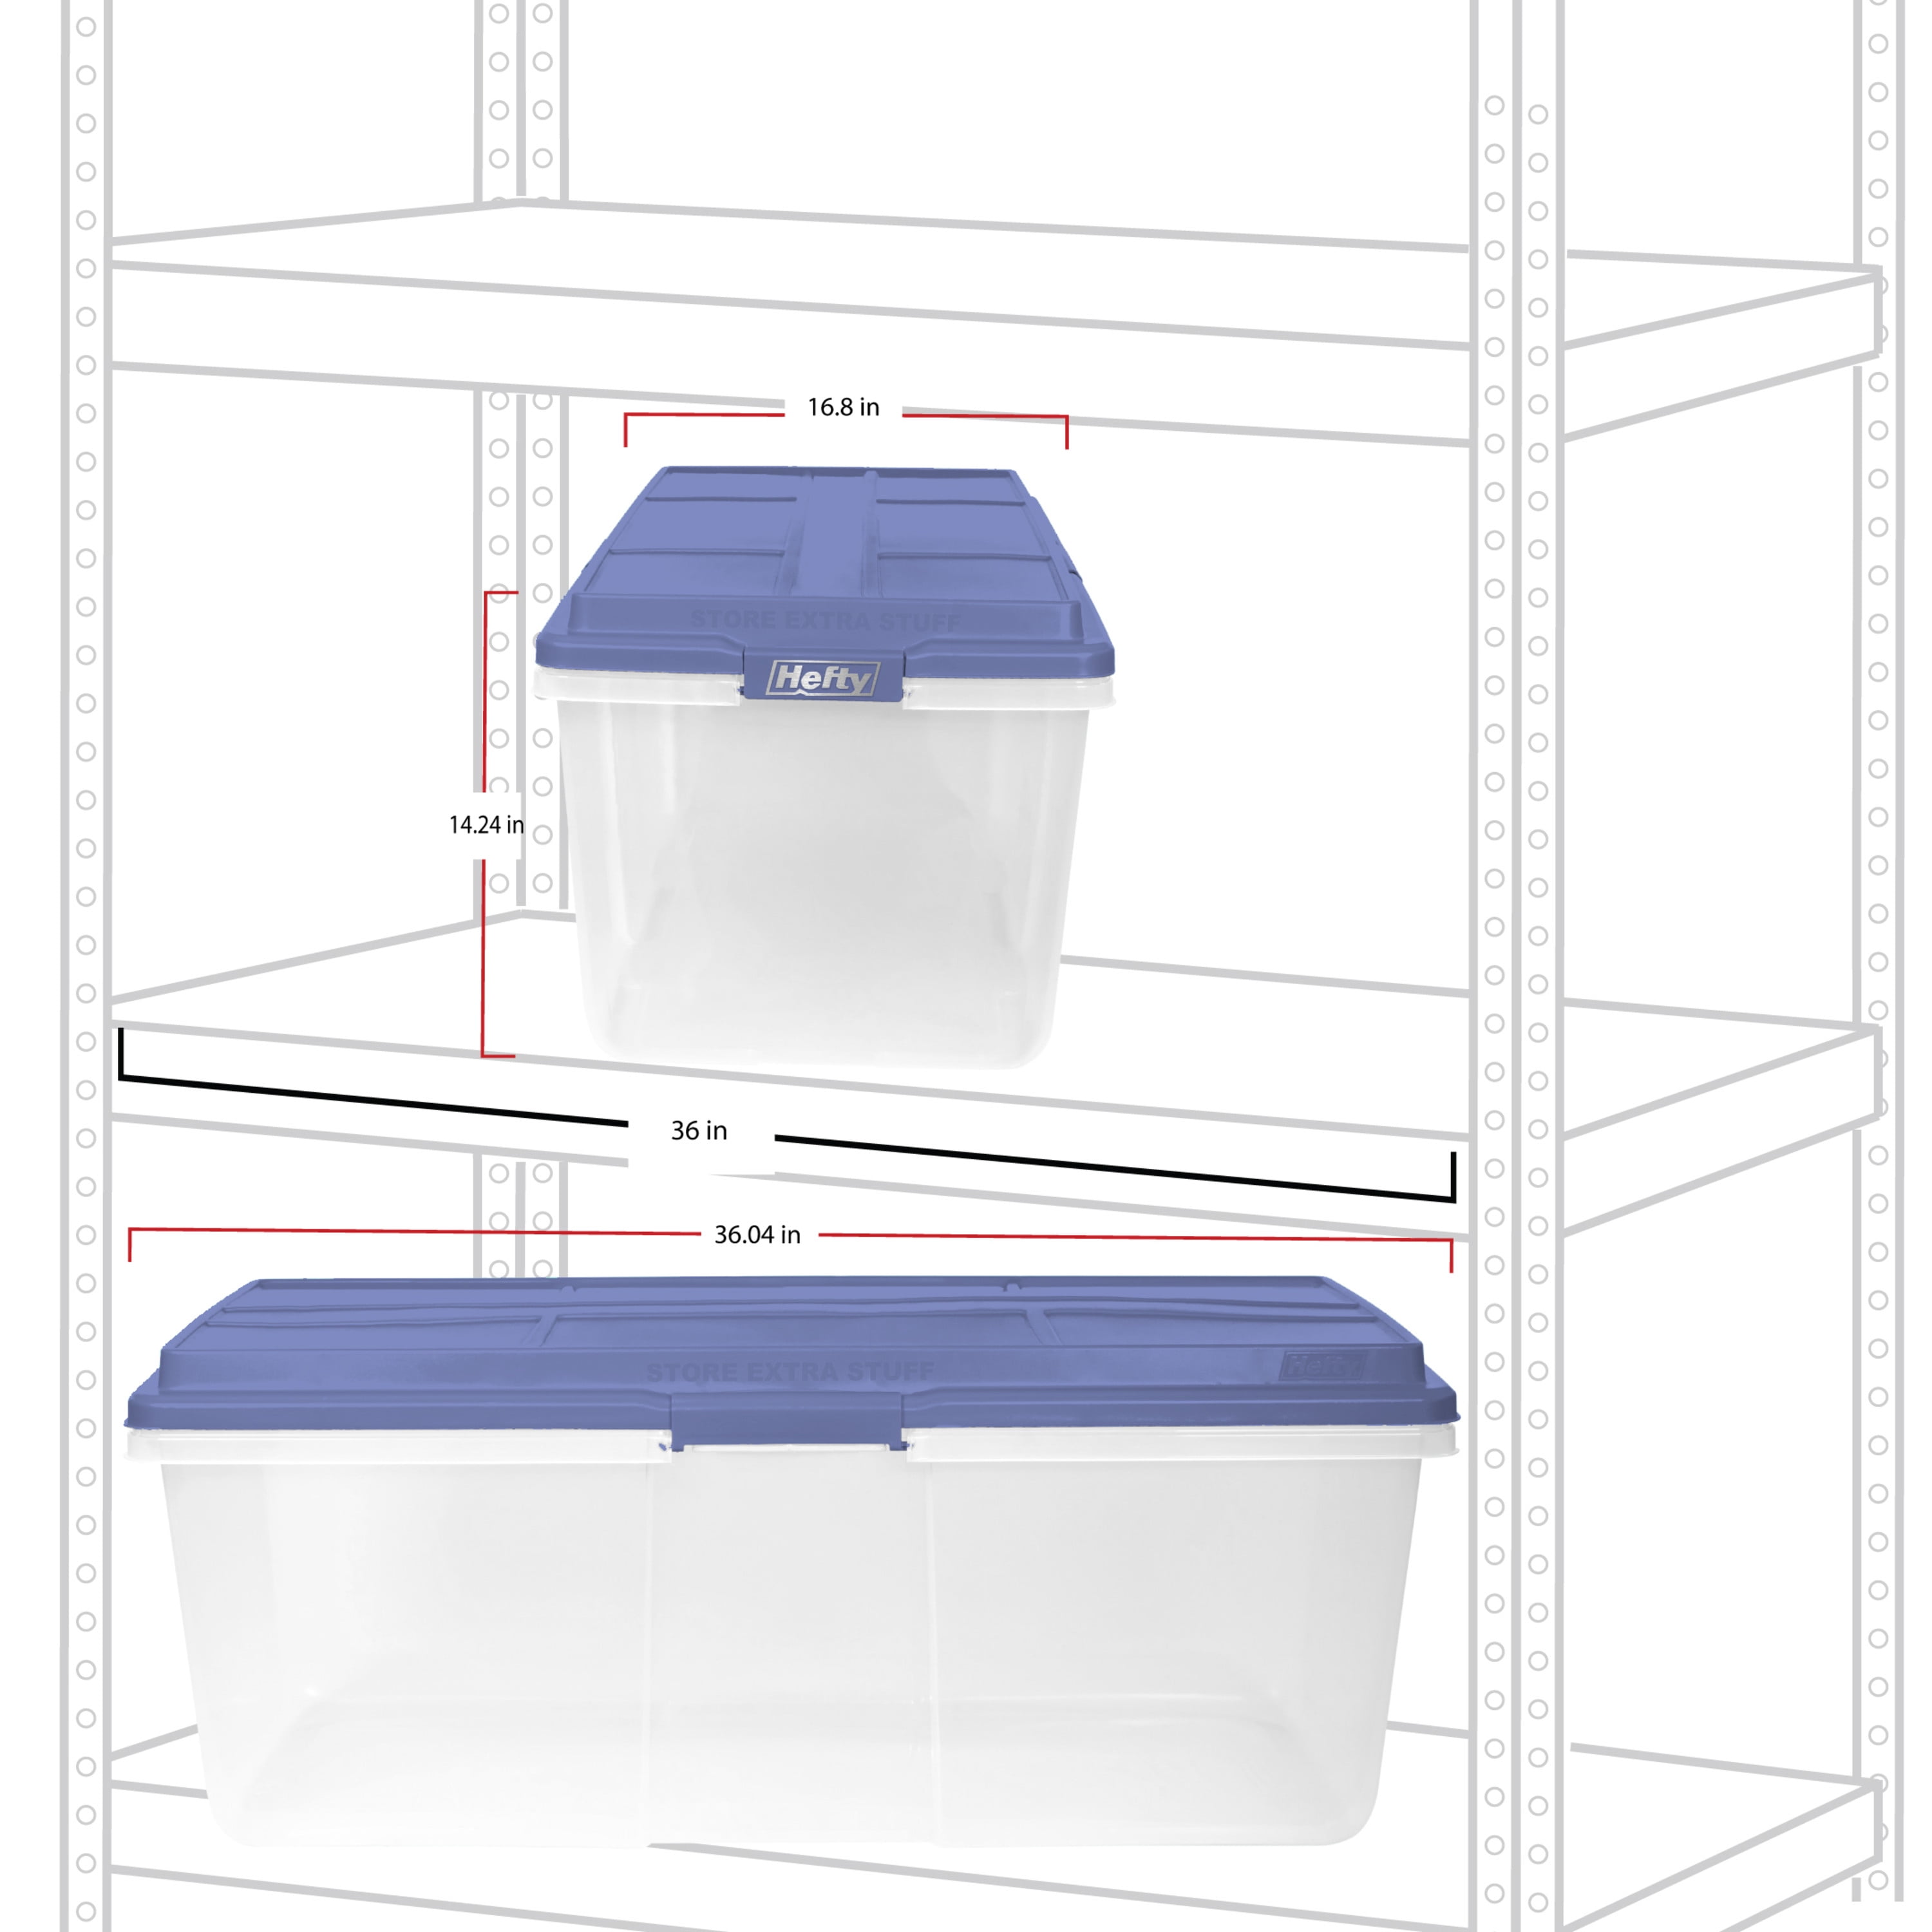 40 Quart Hefty® Hi-Rise™ Clear Storage Bin with Blue Lid - 24.04